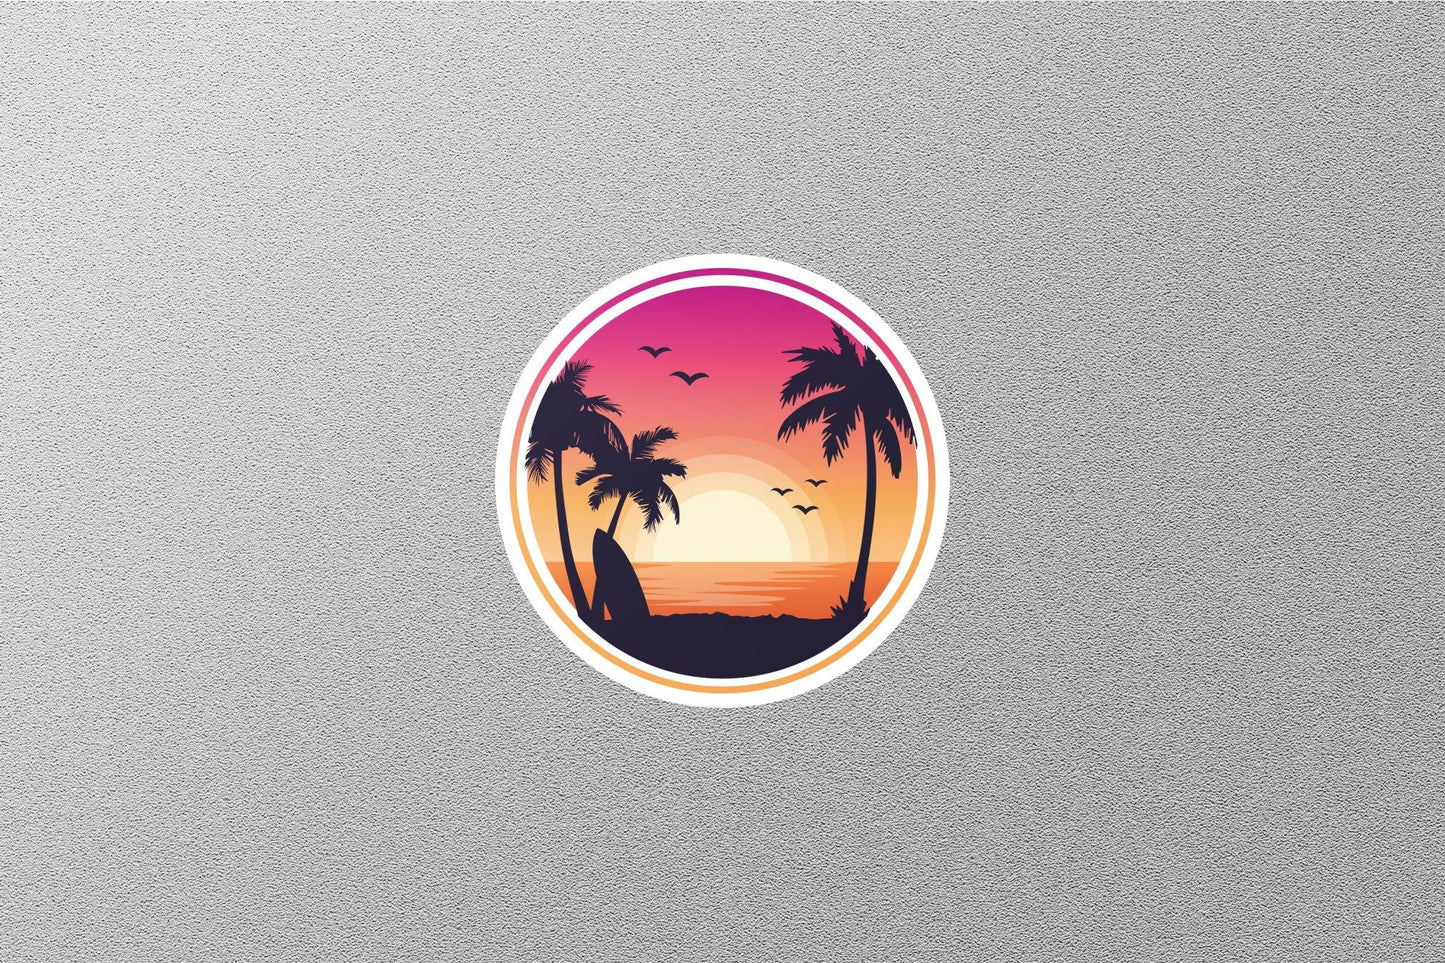 California Beach Sticker